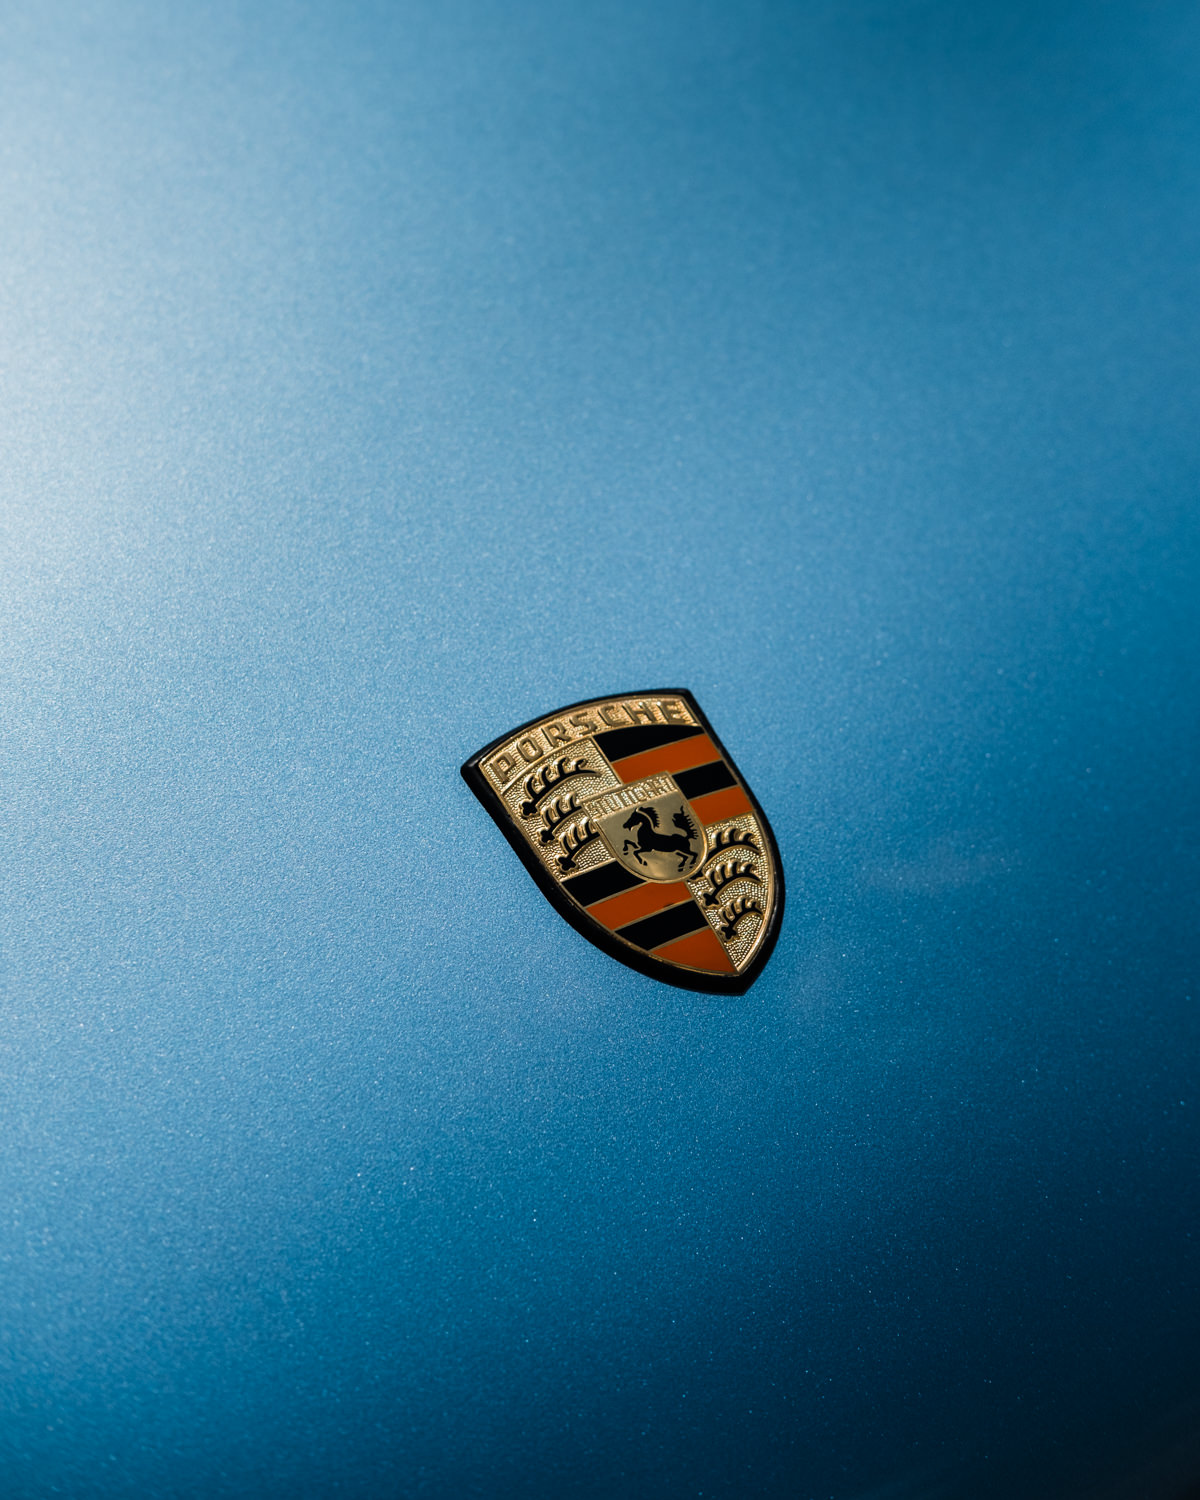 Porsche 911E - Porsche - Wichita Clear Bra - Ceramic Pro - Ceramic Coating - Car Detailing - Porsche 911-118.jpg